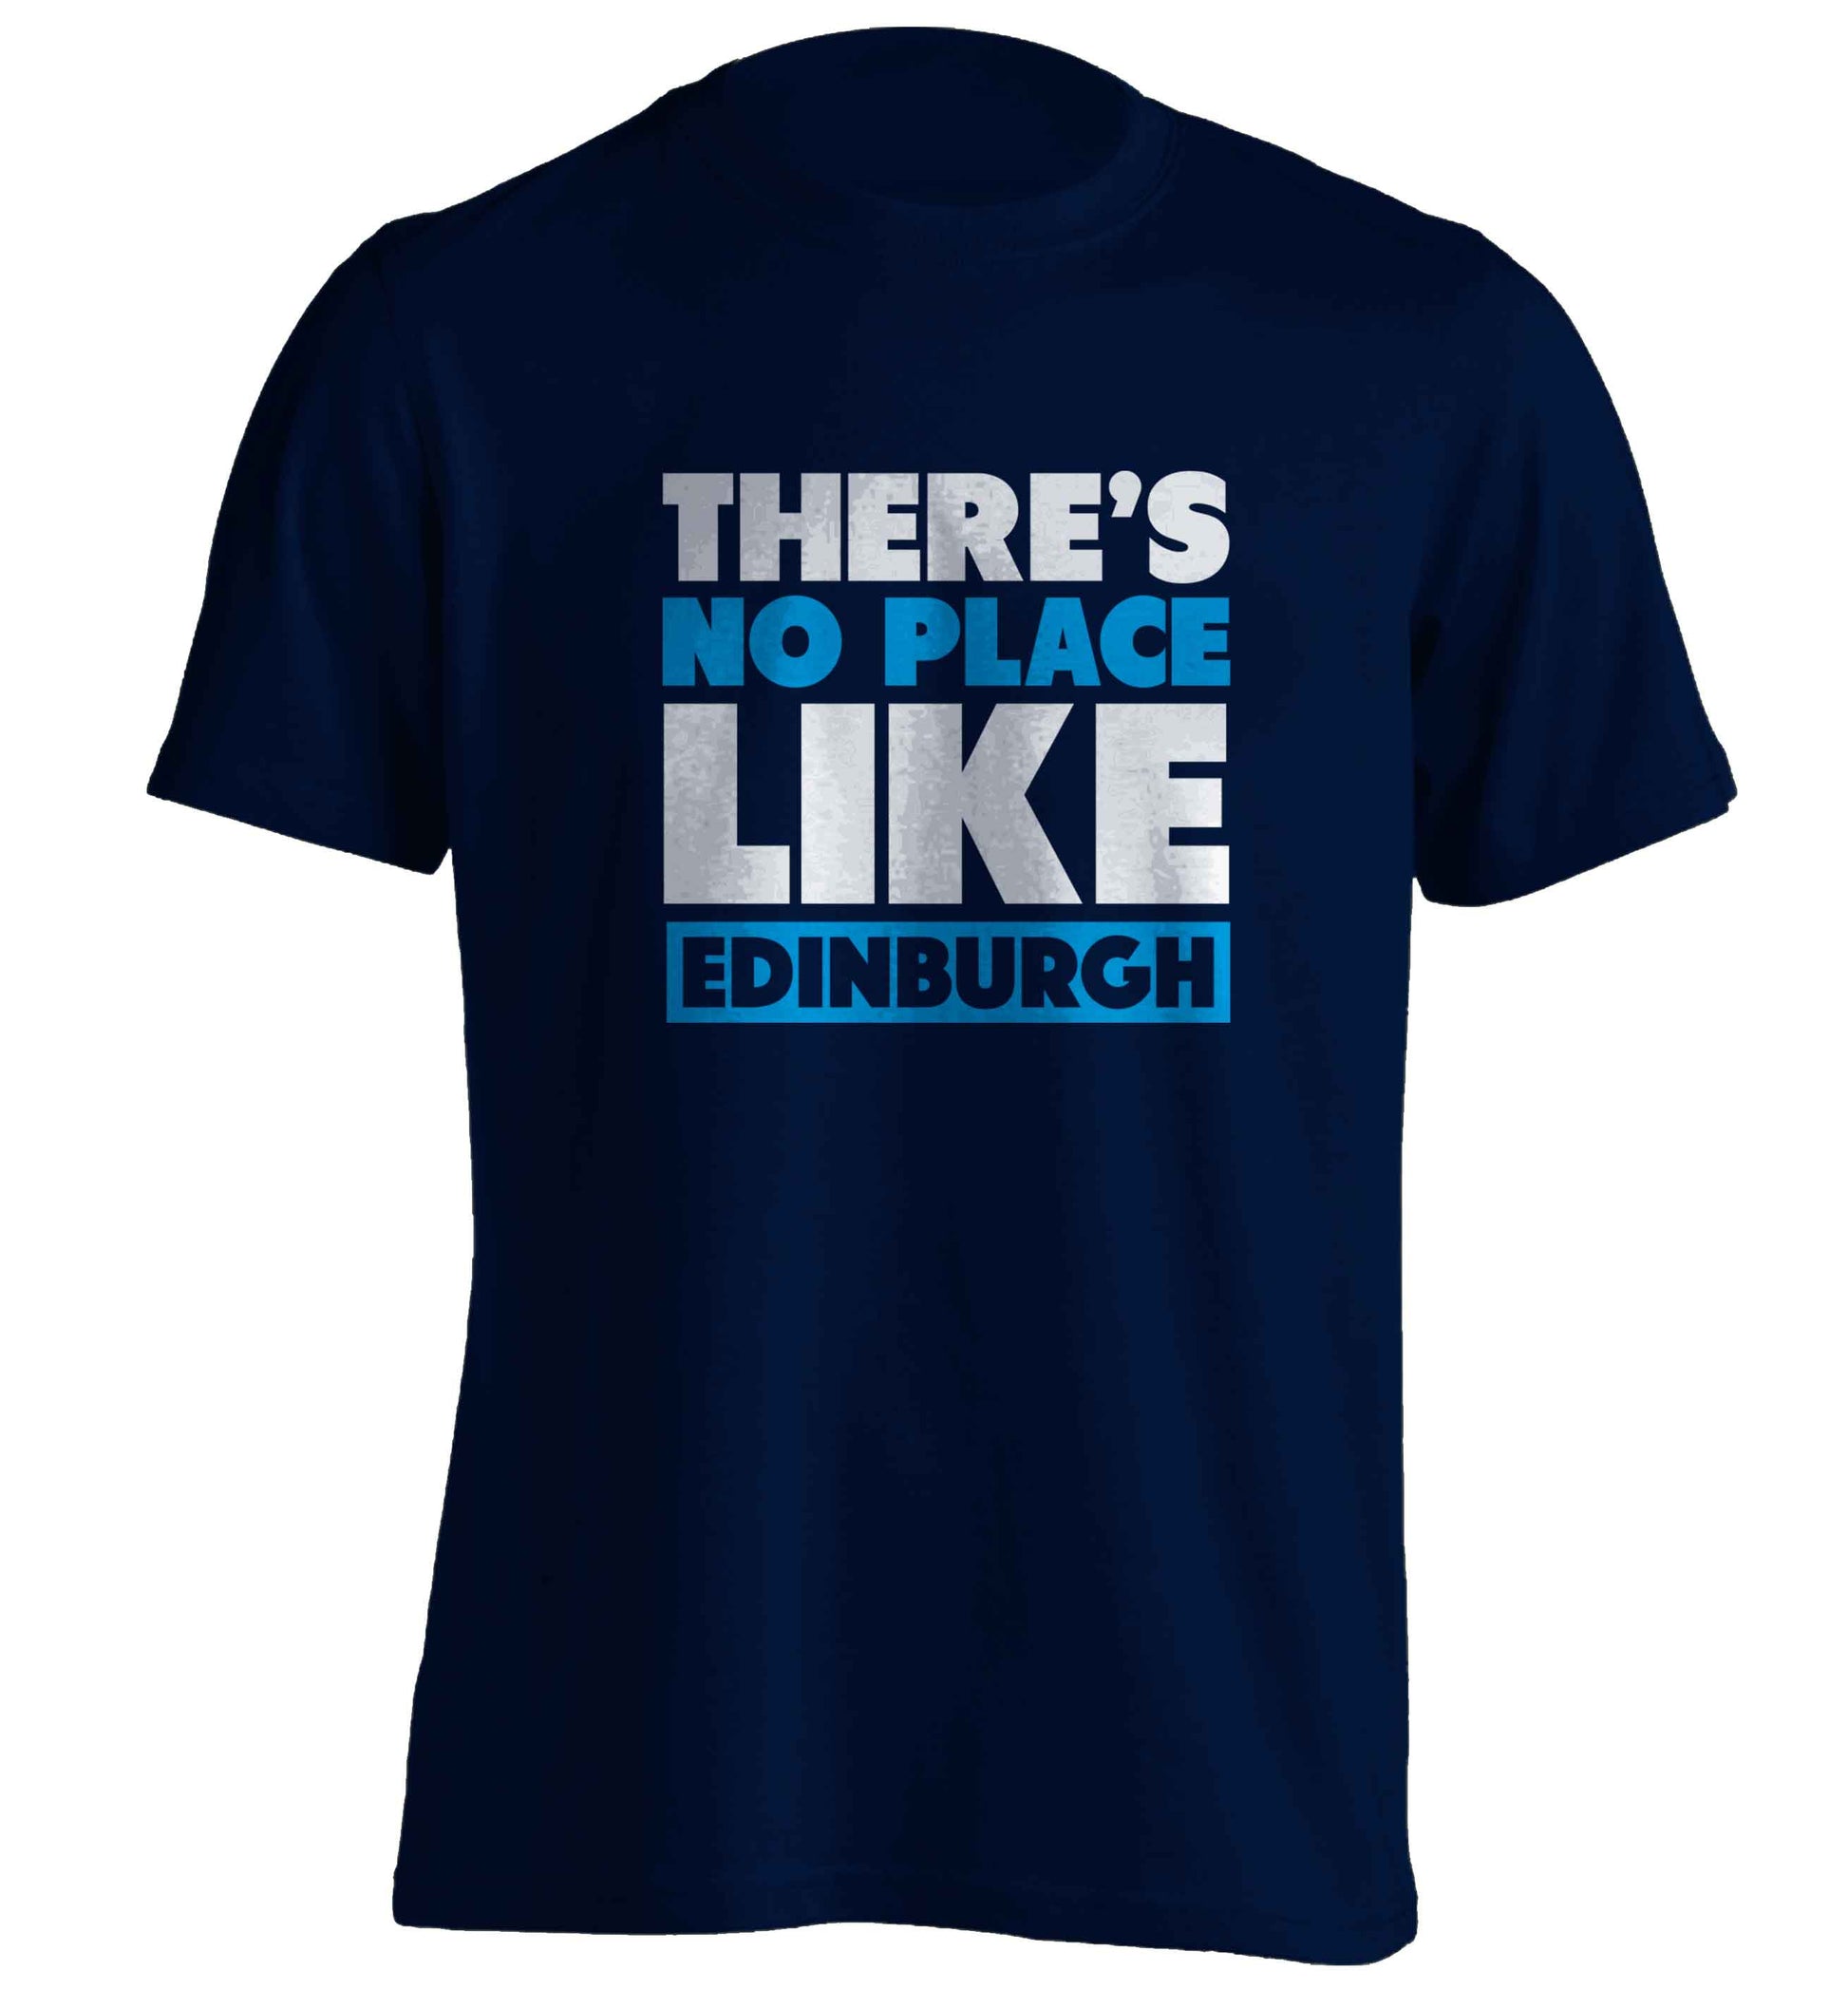 There's no place like Edinburgh adults unisex navy Tshirt 2XL